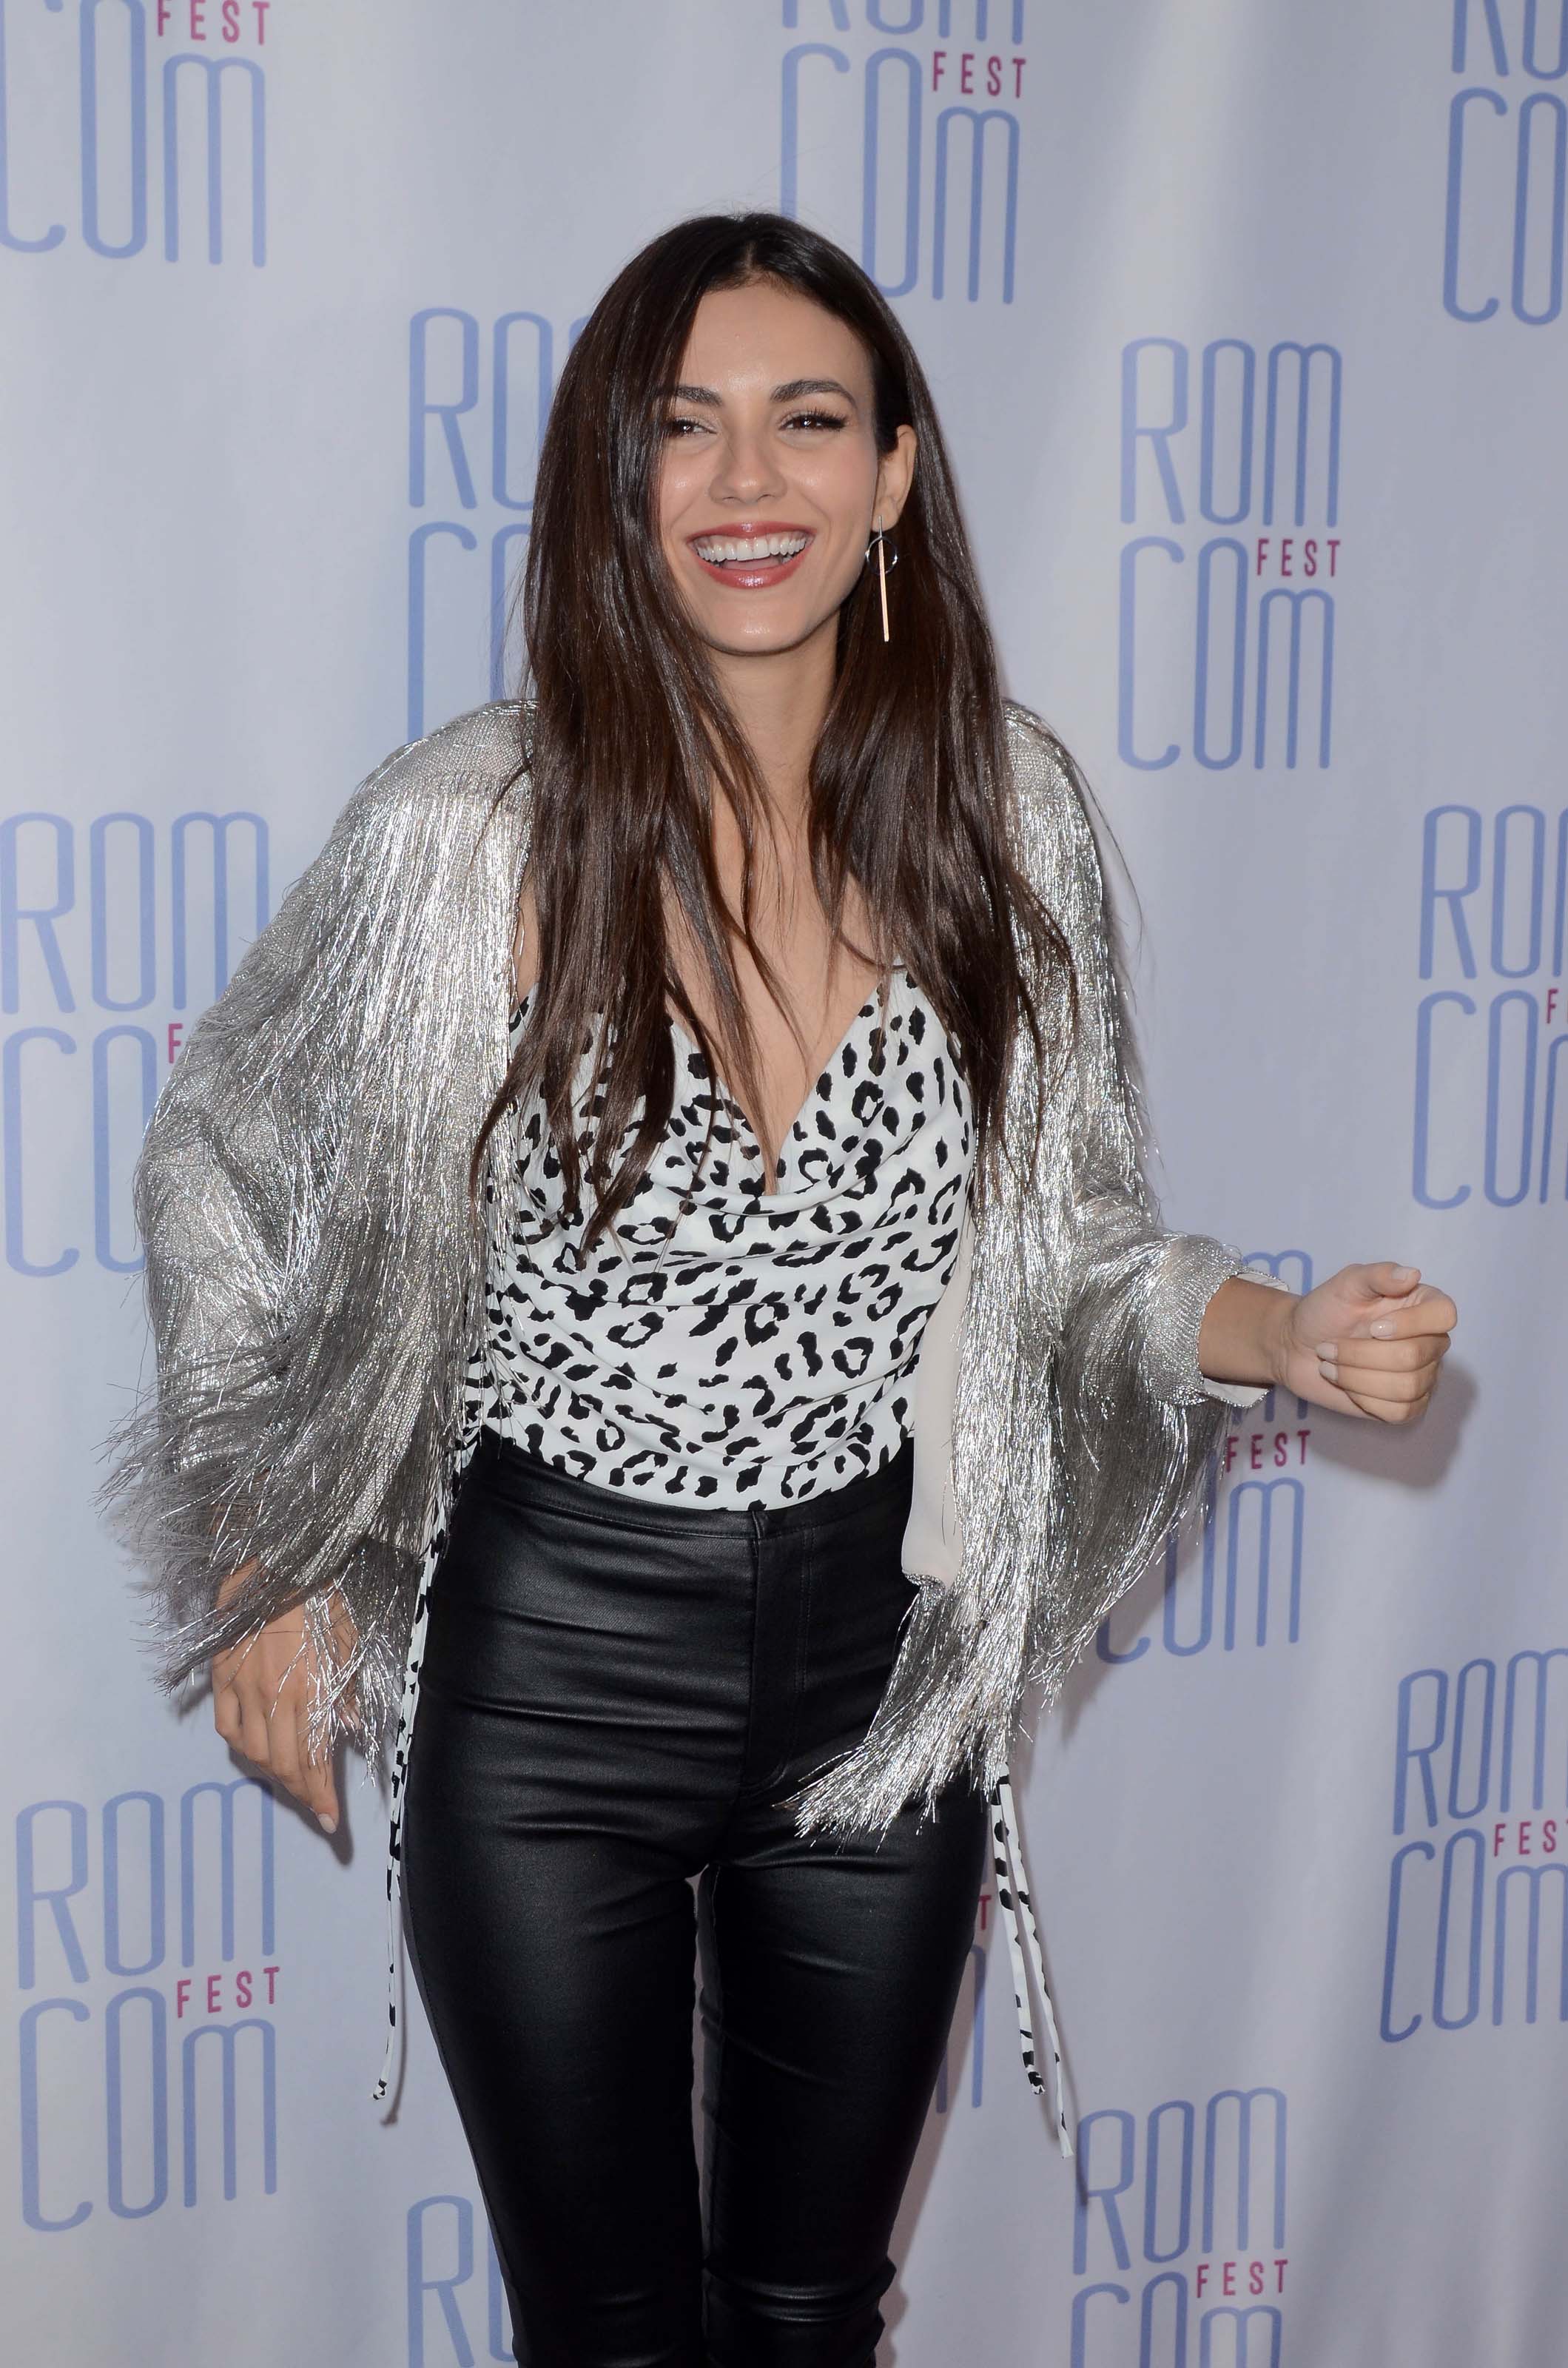 Victoria Justice attends 2019 Rom Con Fest Los Angeles screening of Summer Night